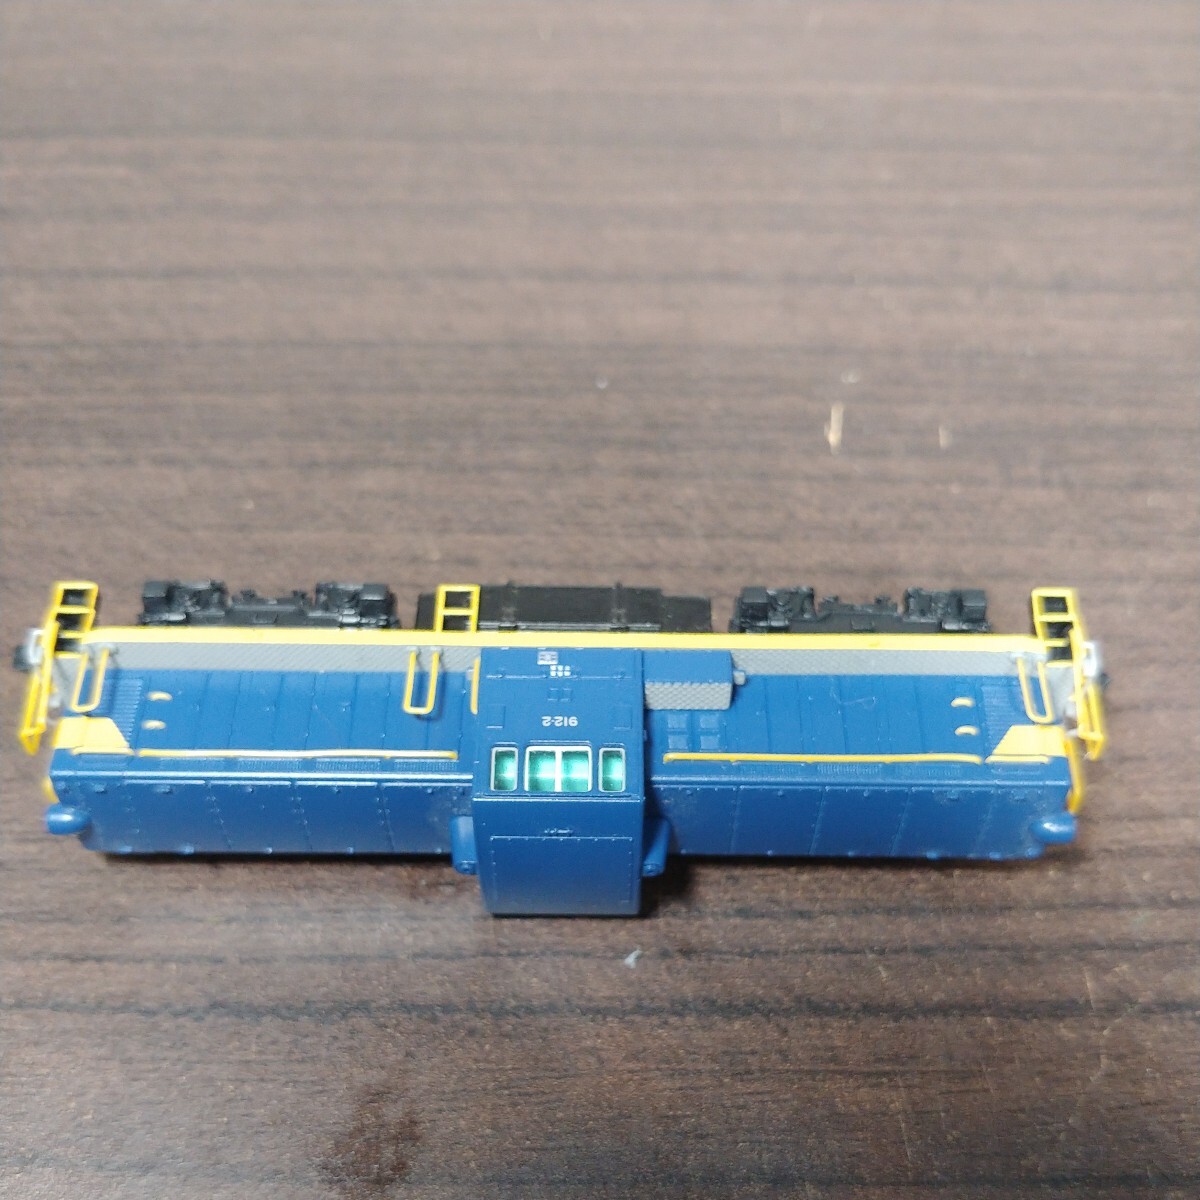 MICROACE 912-2 Shinkansen for diesel locomotive (A8806) micro Ace 